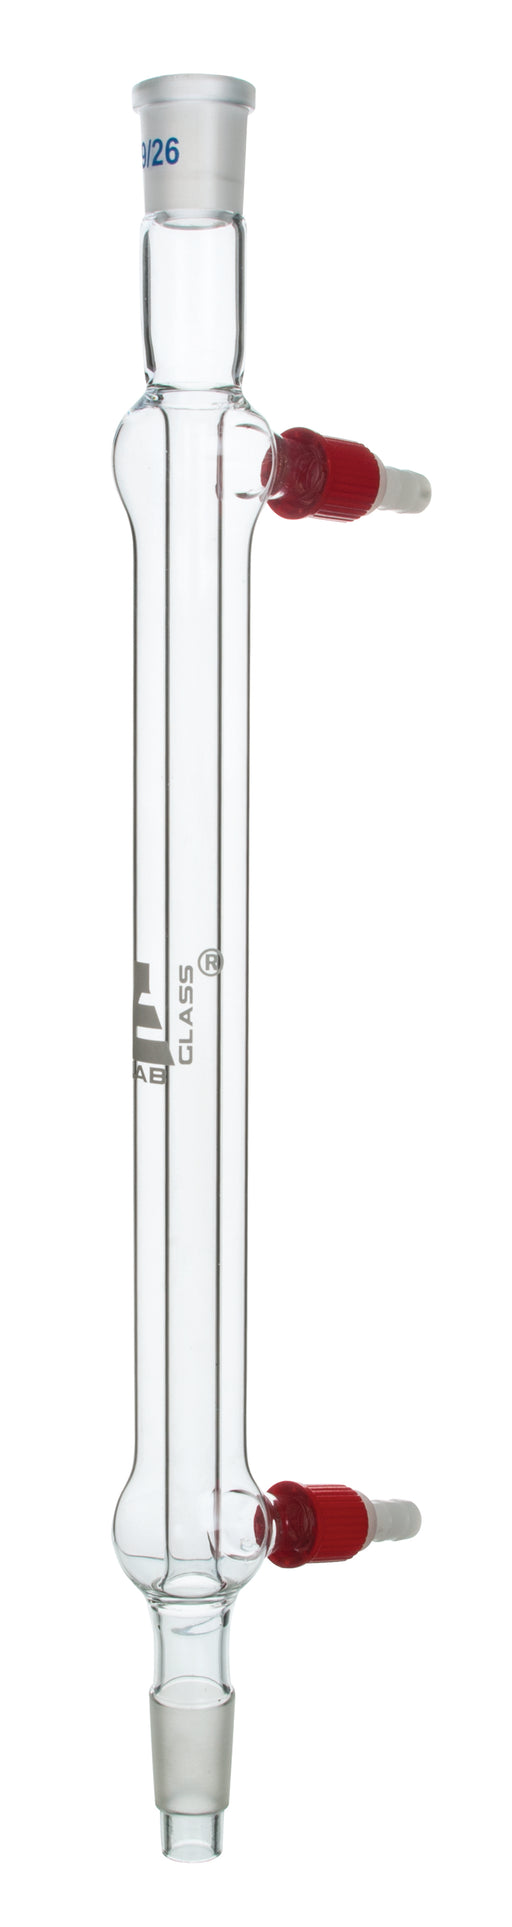 Condenser Liebig - Jointed, Plastic Connectors